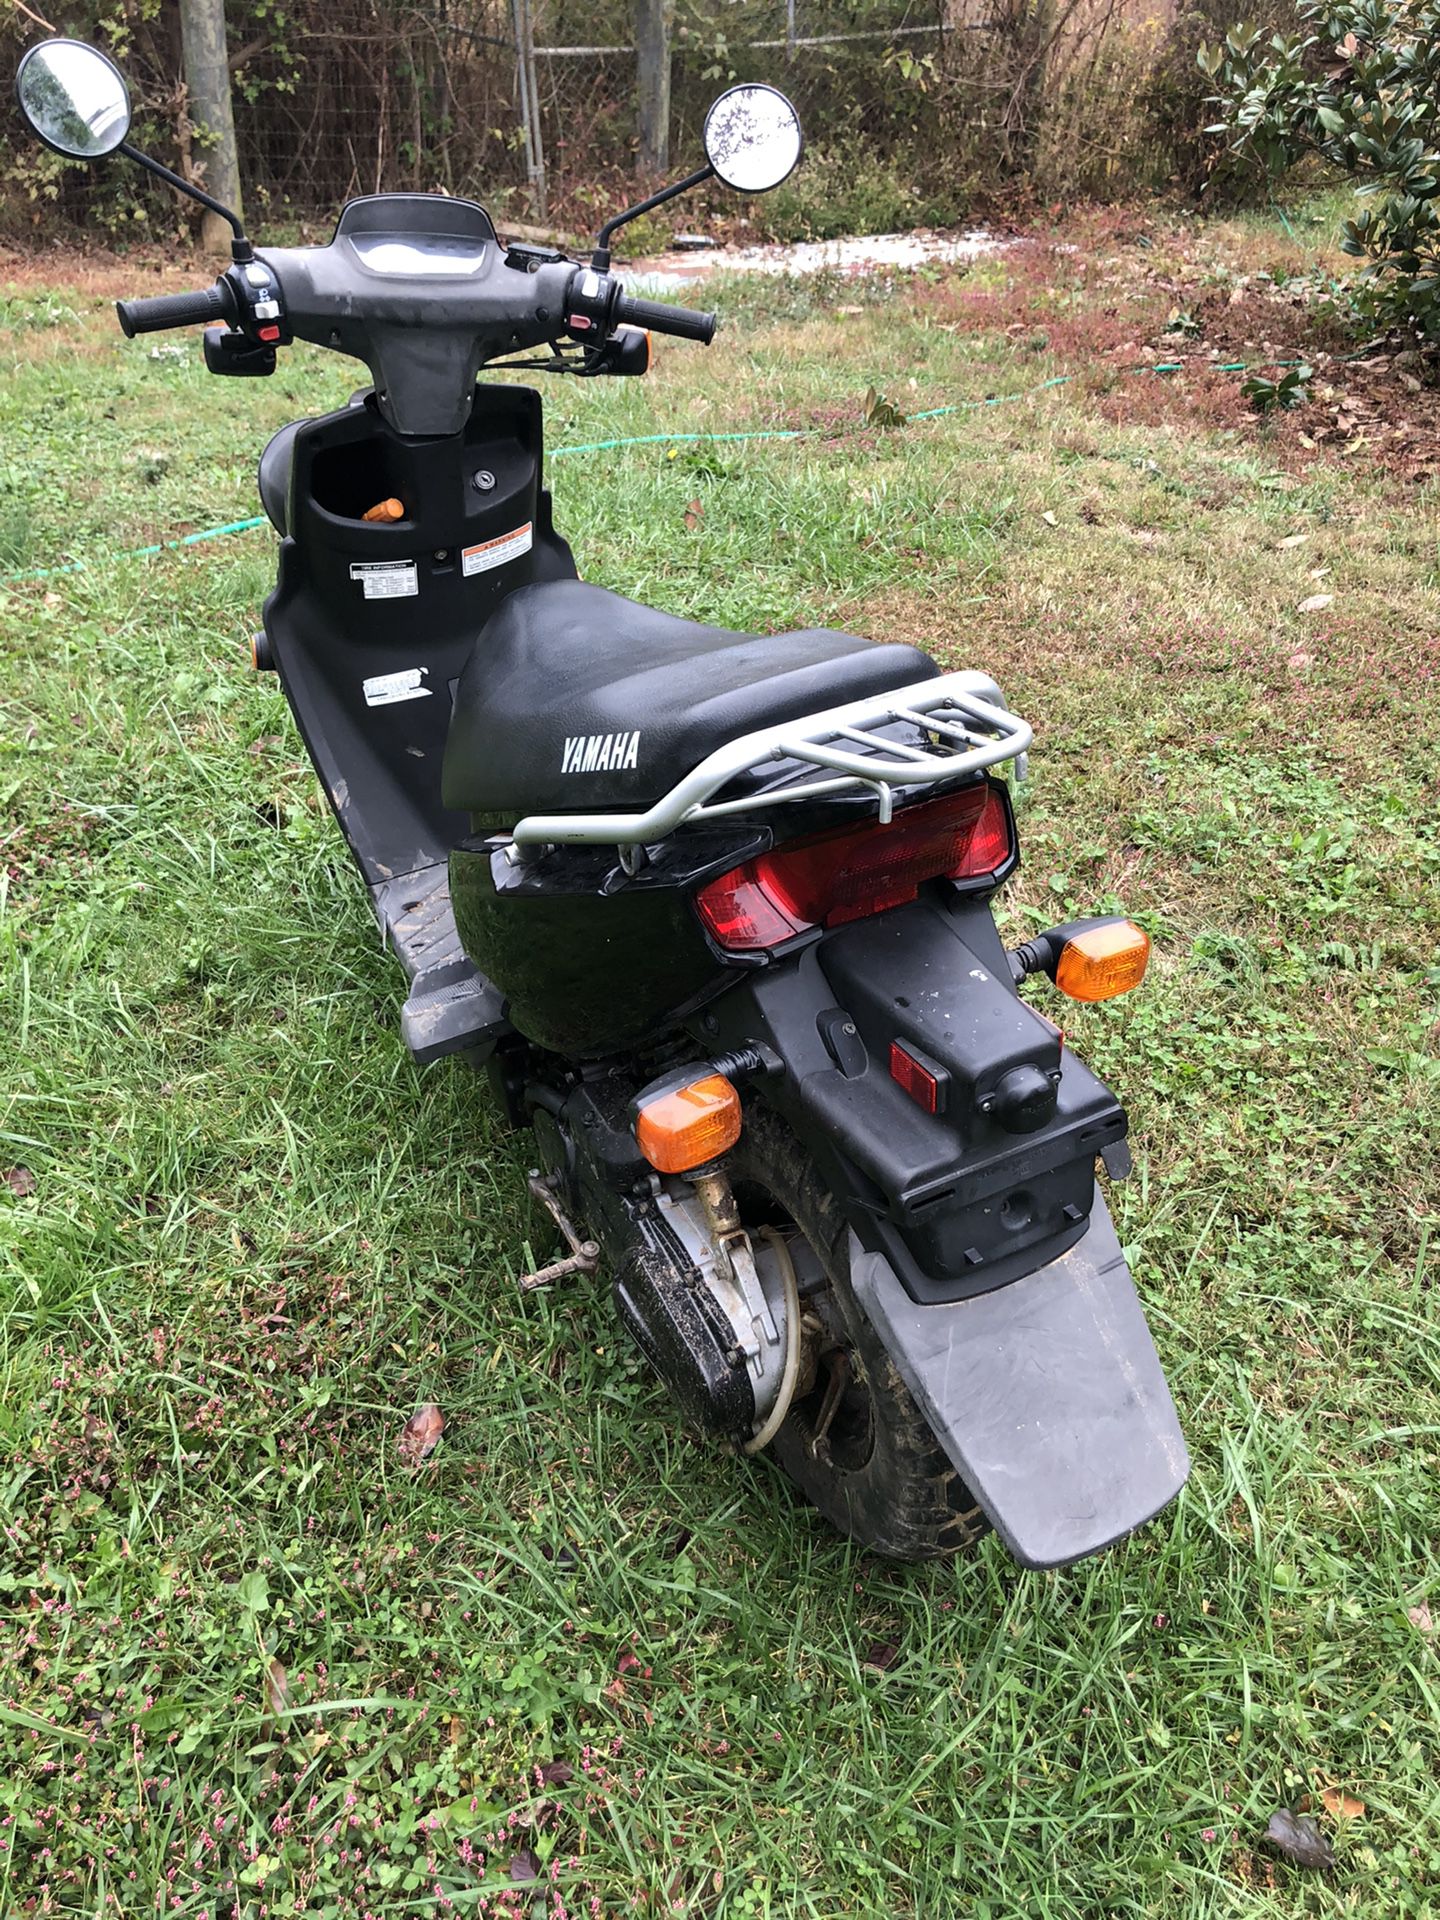 Yamaha scooter 2007